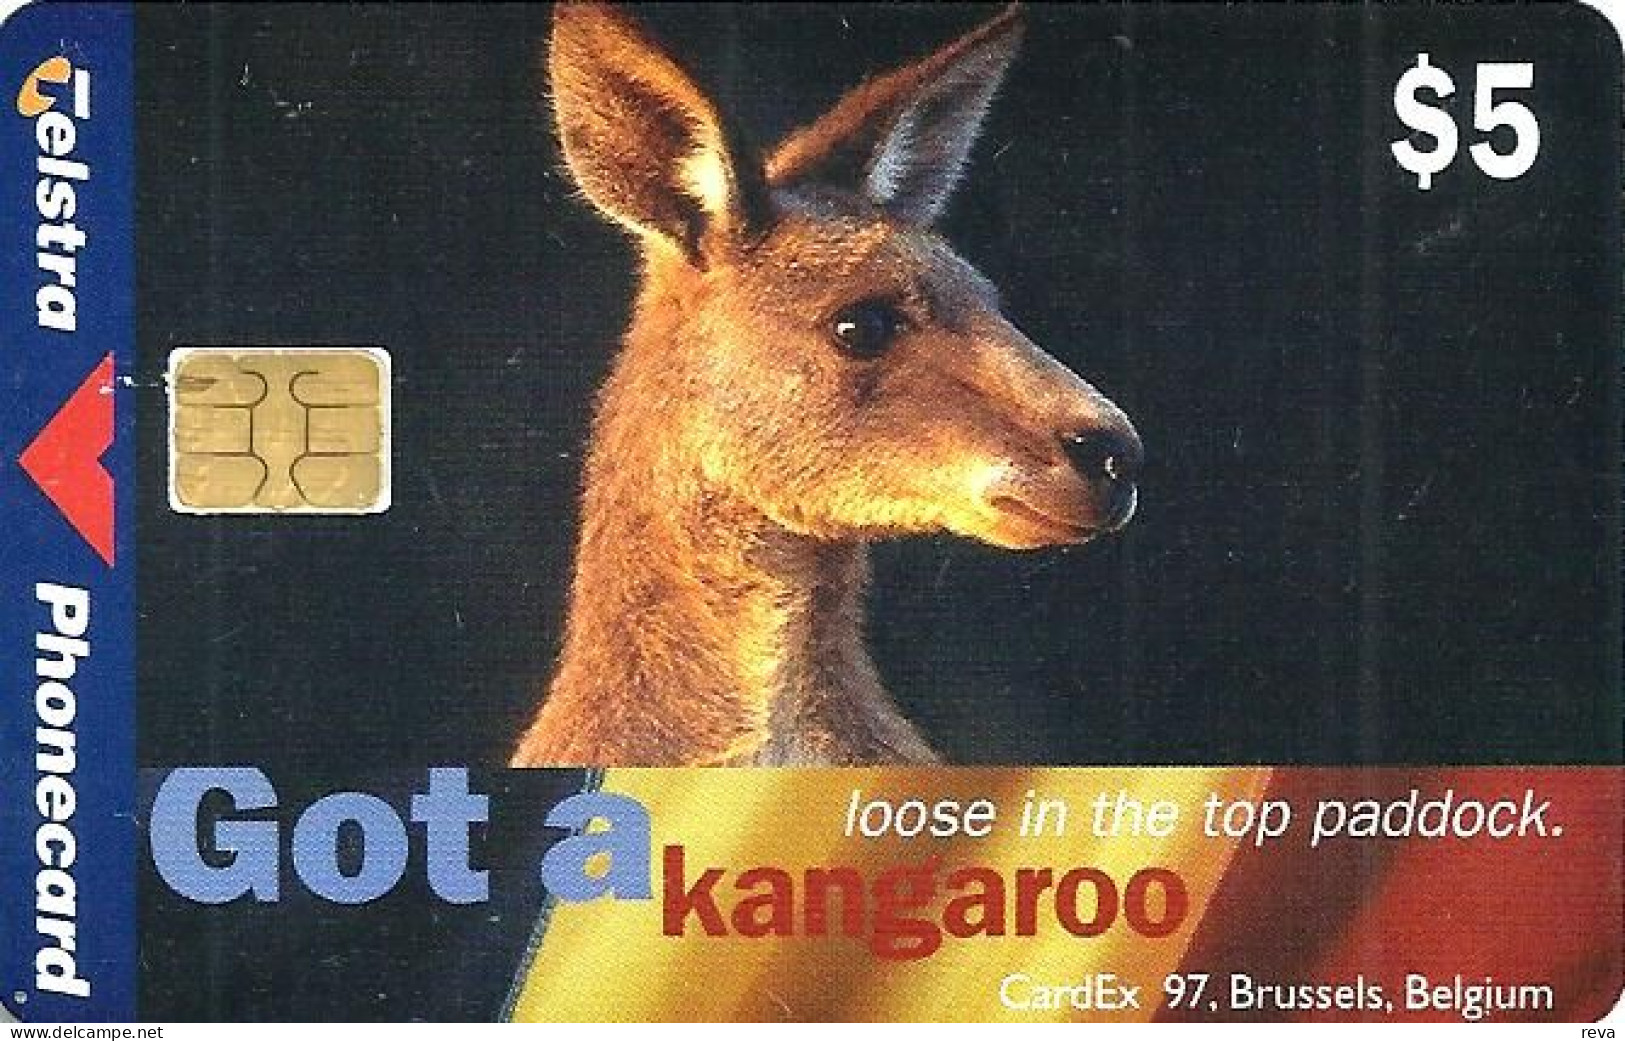 AUSTRALIA $5 KANGAROO ANIMAL  BELGIUM 1997 FAIR CHIP CARD 1500 ONLY !!!!!! CODE 97-11P READ DESCRIPTION !! - Australie